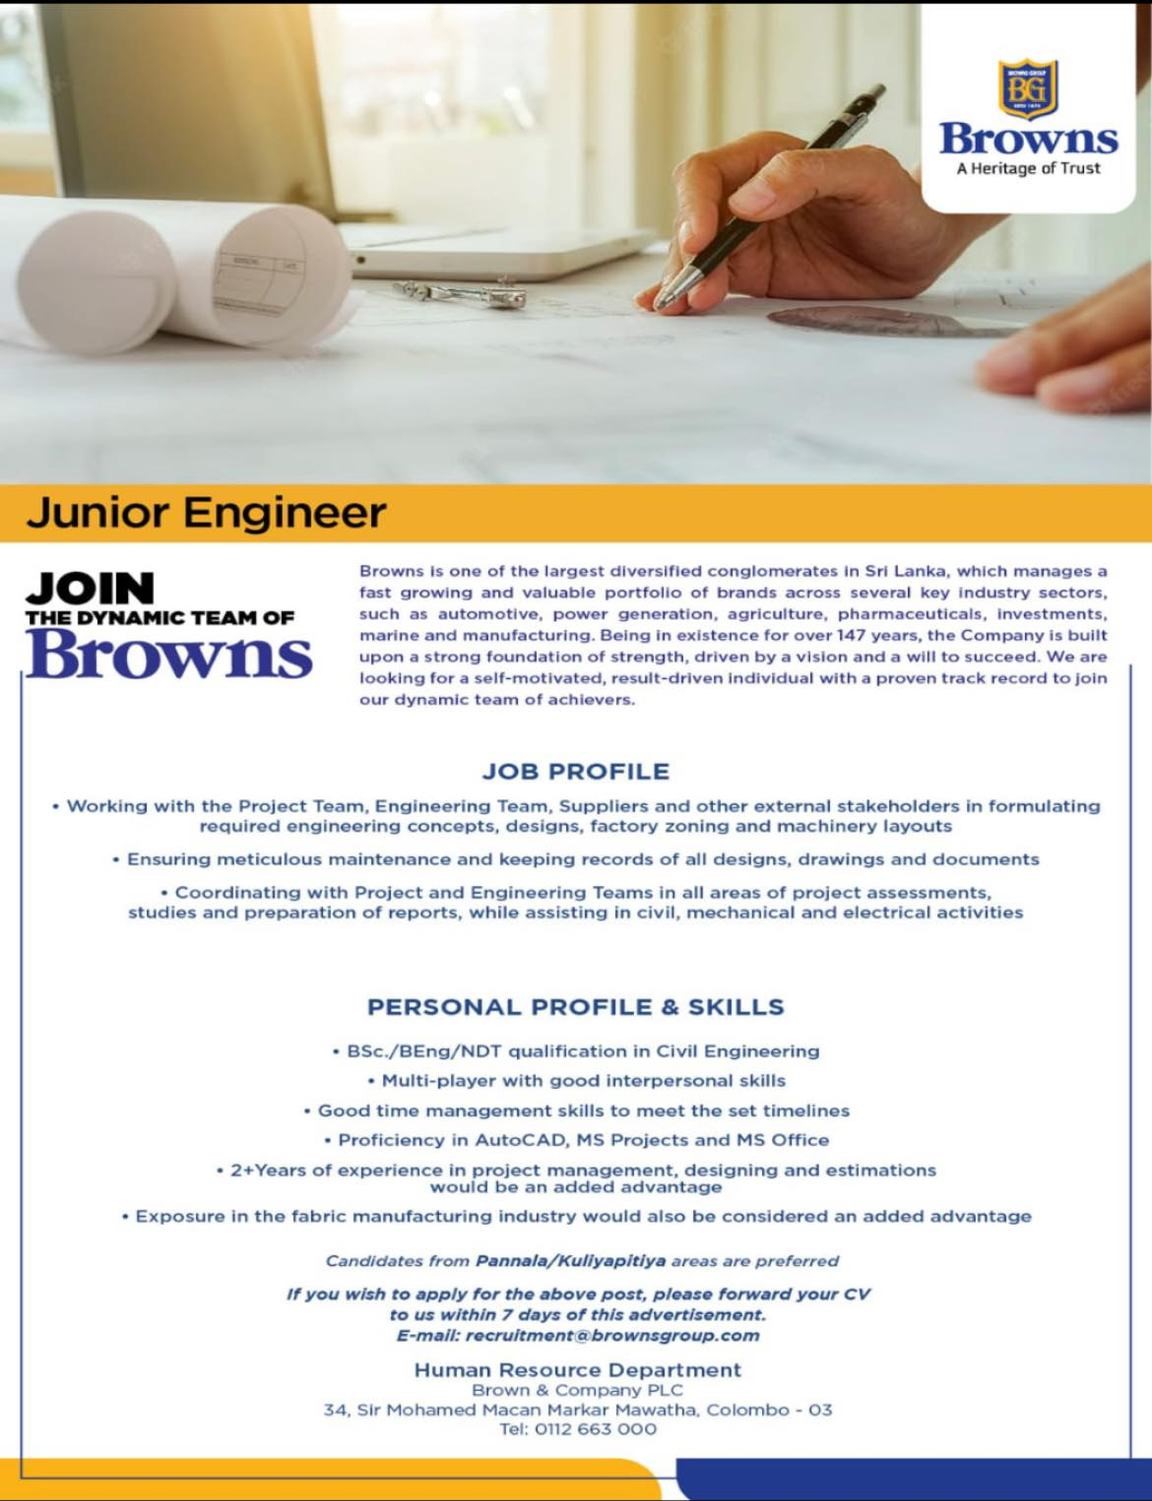 Junior Engineer Jobs Vacancies - Brown and Company PLC Jobs Vacancies Details